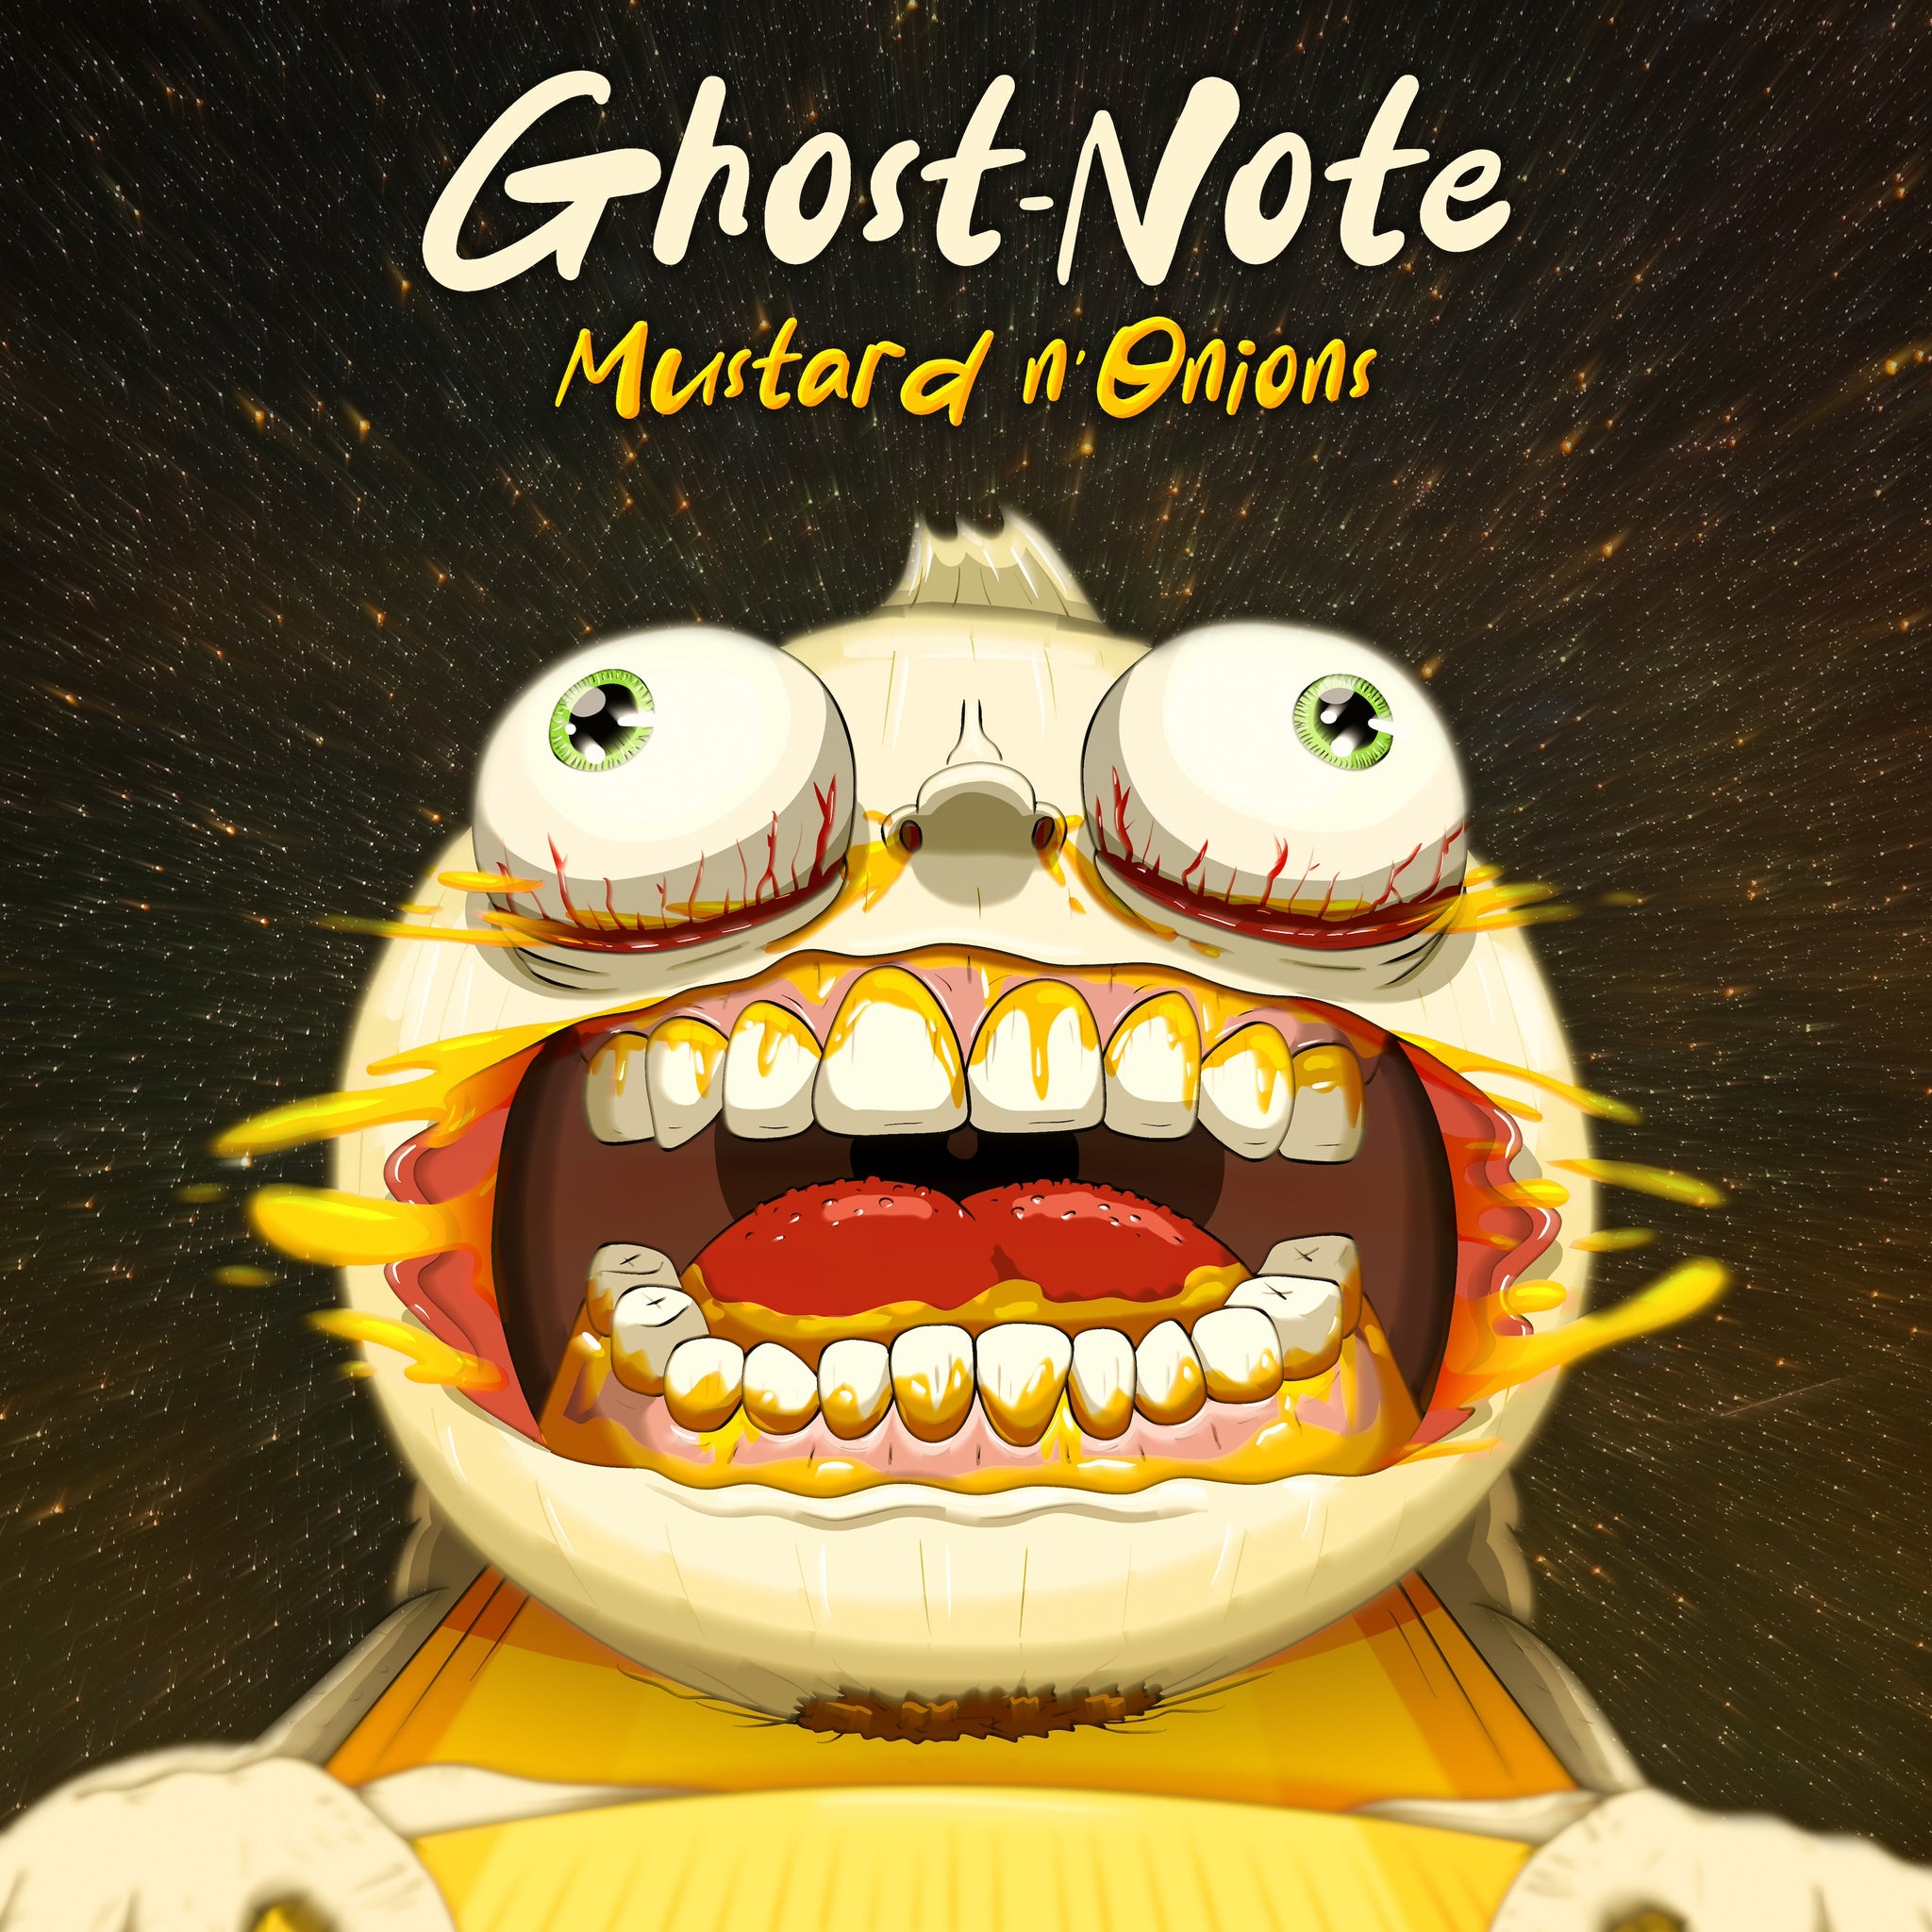 Ghost–Note - Mustard n’Onions